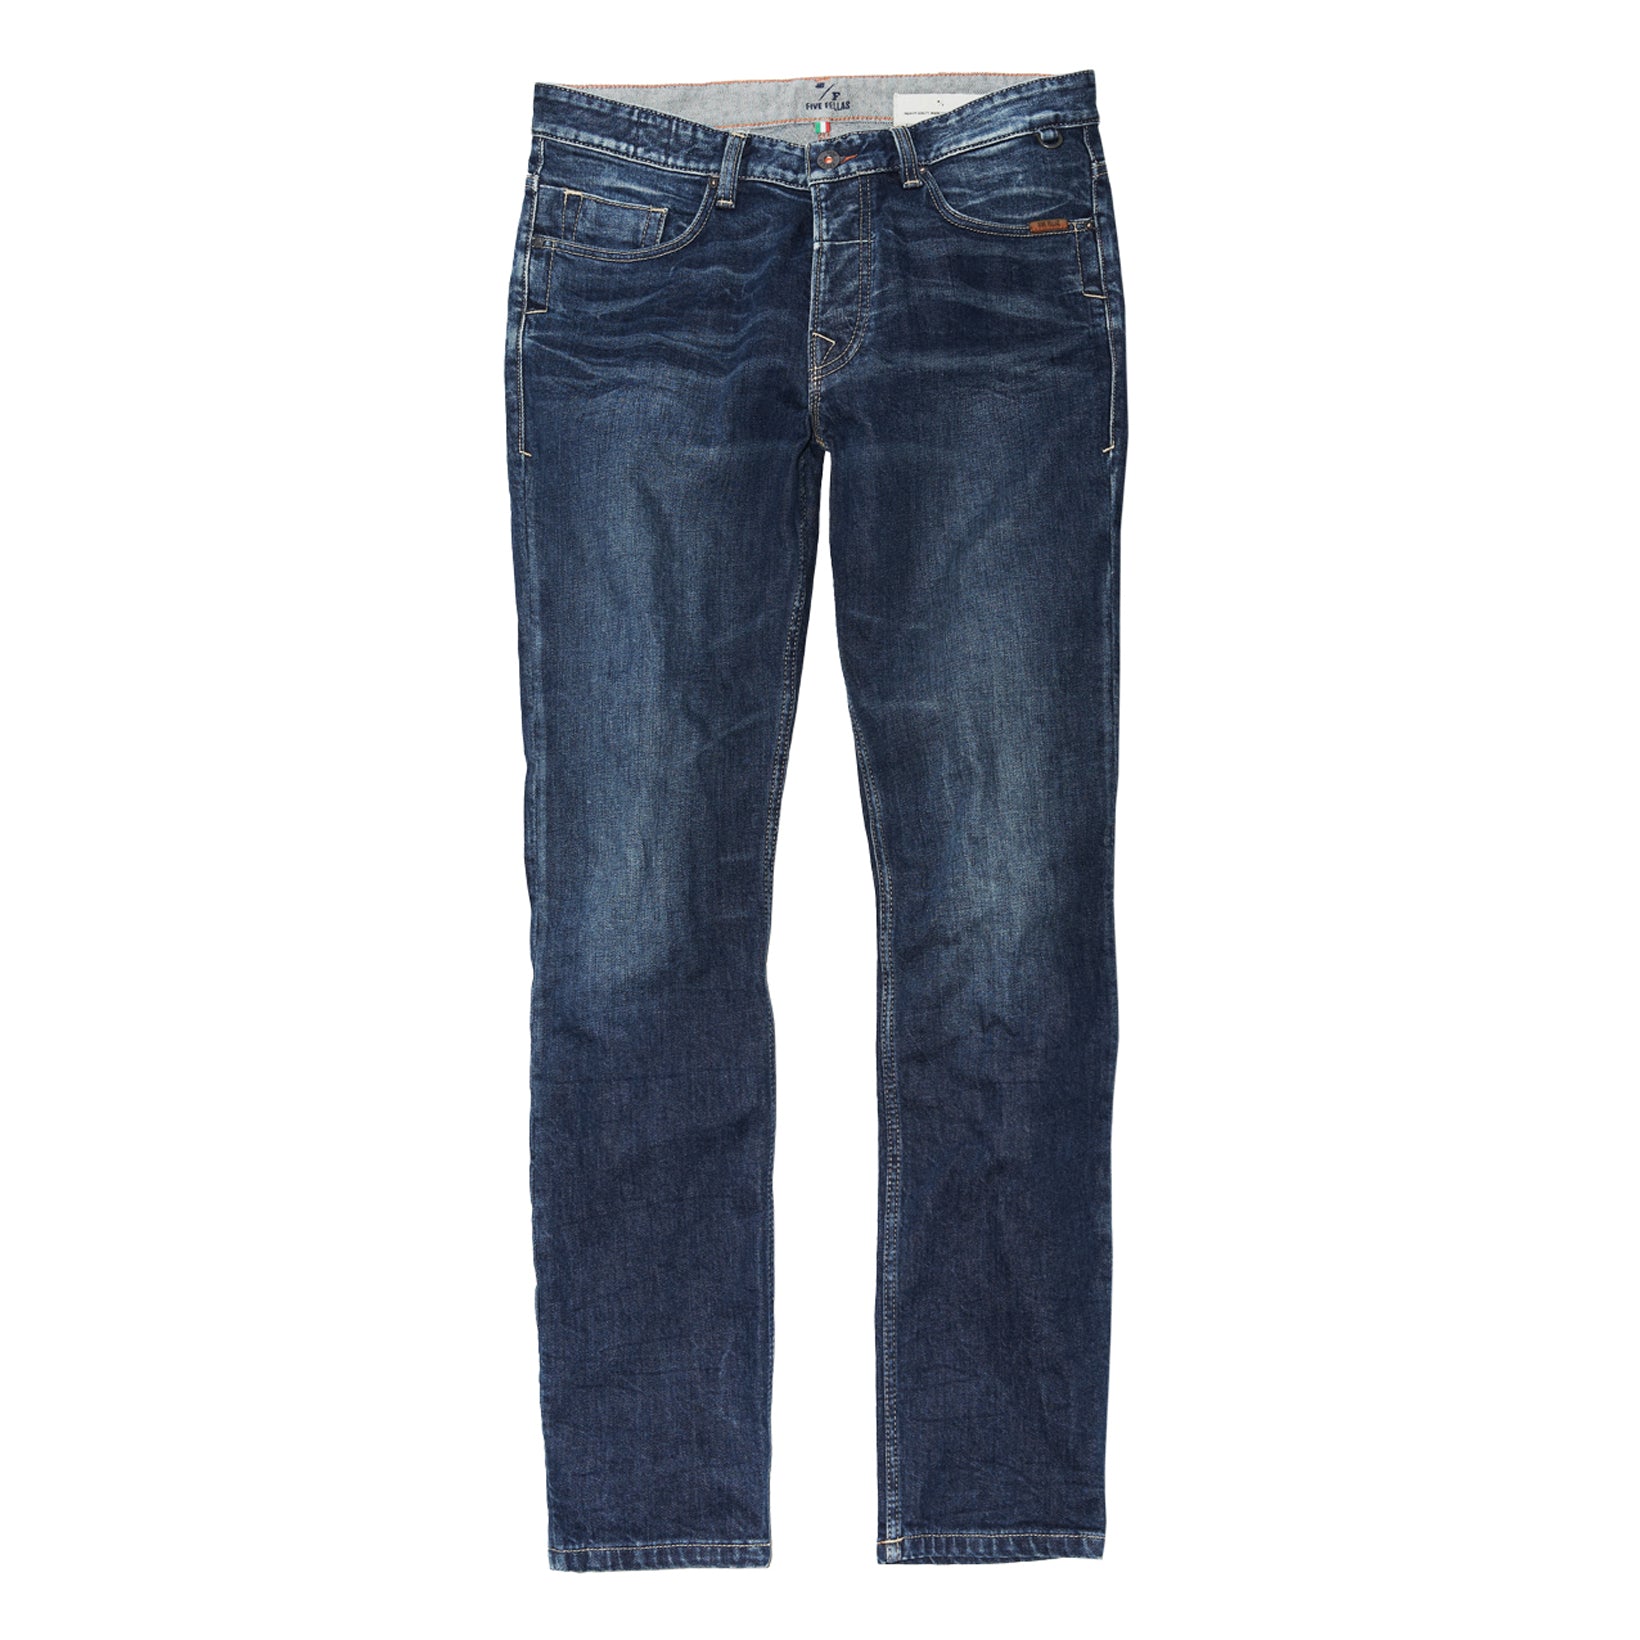 Luuk-Z Straight Fit Jeans Zip-Five Fellas-Conrad Hasselbach Shoes & Garment